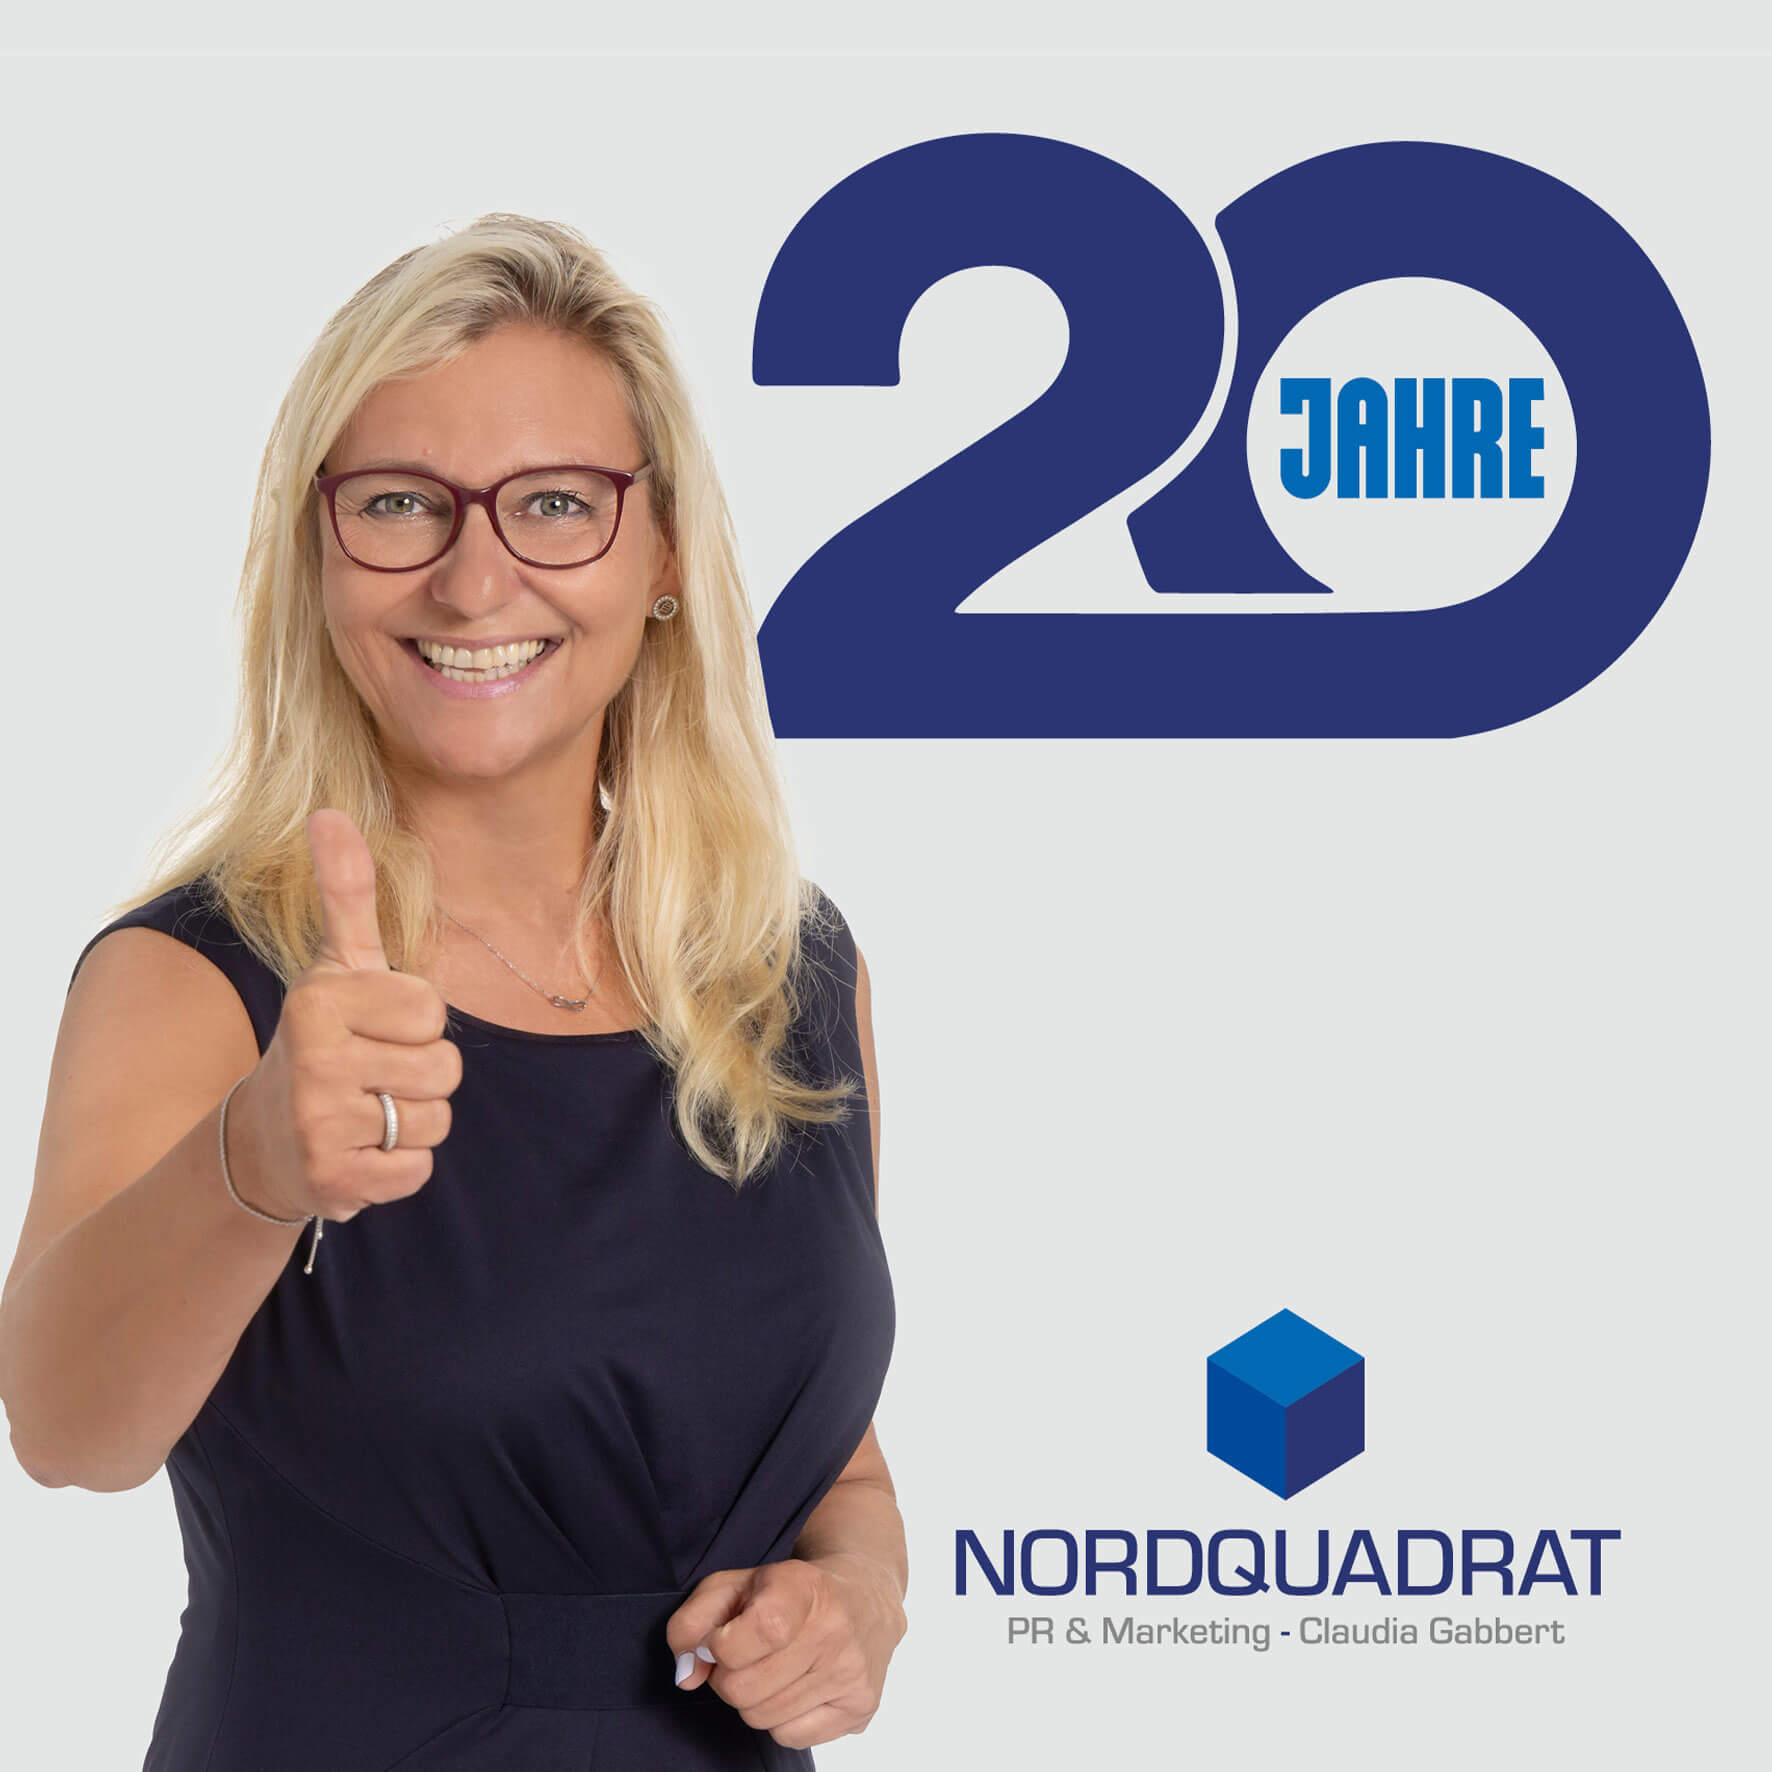 Nordquadrat PR + Marketing - Claudia Gabbert - News - Nordquadrat wir 20 Jahre alt